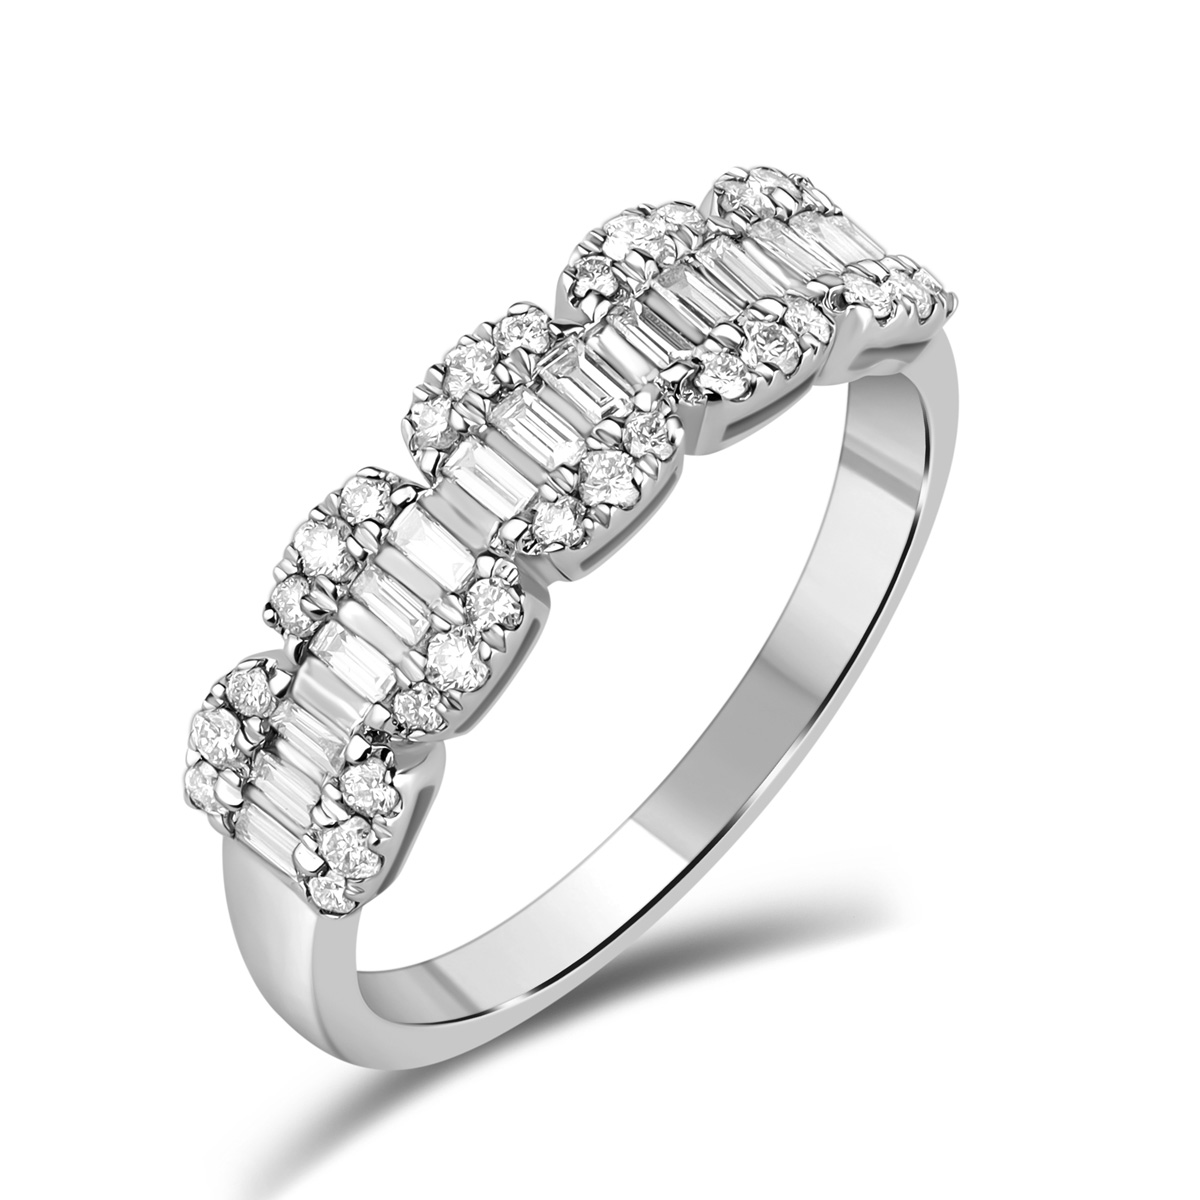 HE52459RWD4WP
14K white gold diamond ring